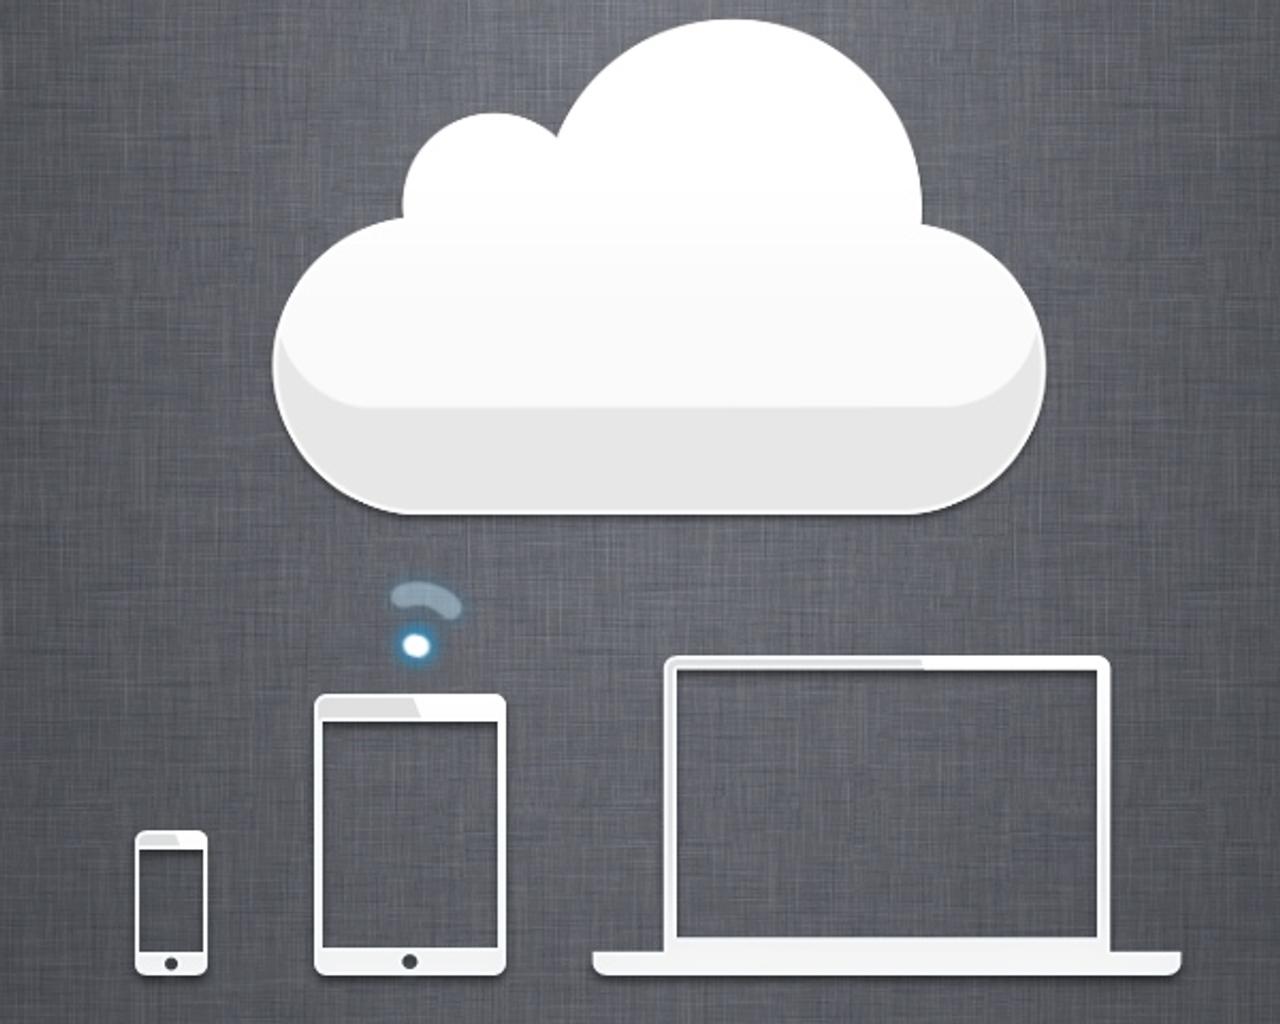 【 #iPadmini 】iPad miniに環境を移行する場合はiCloudを使うと便利